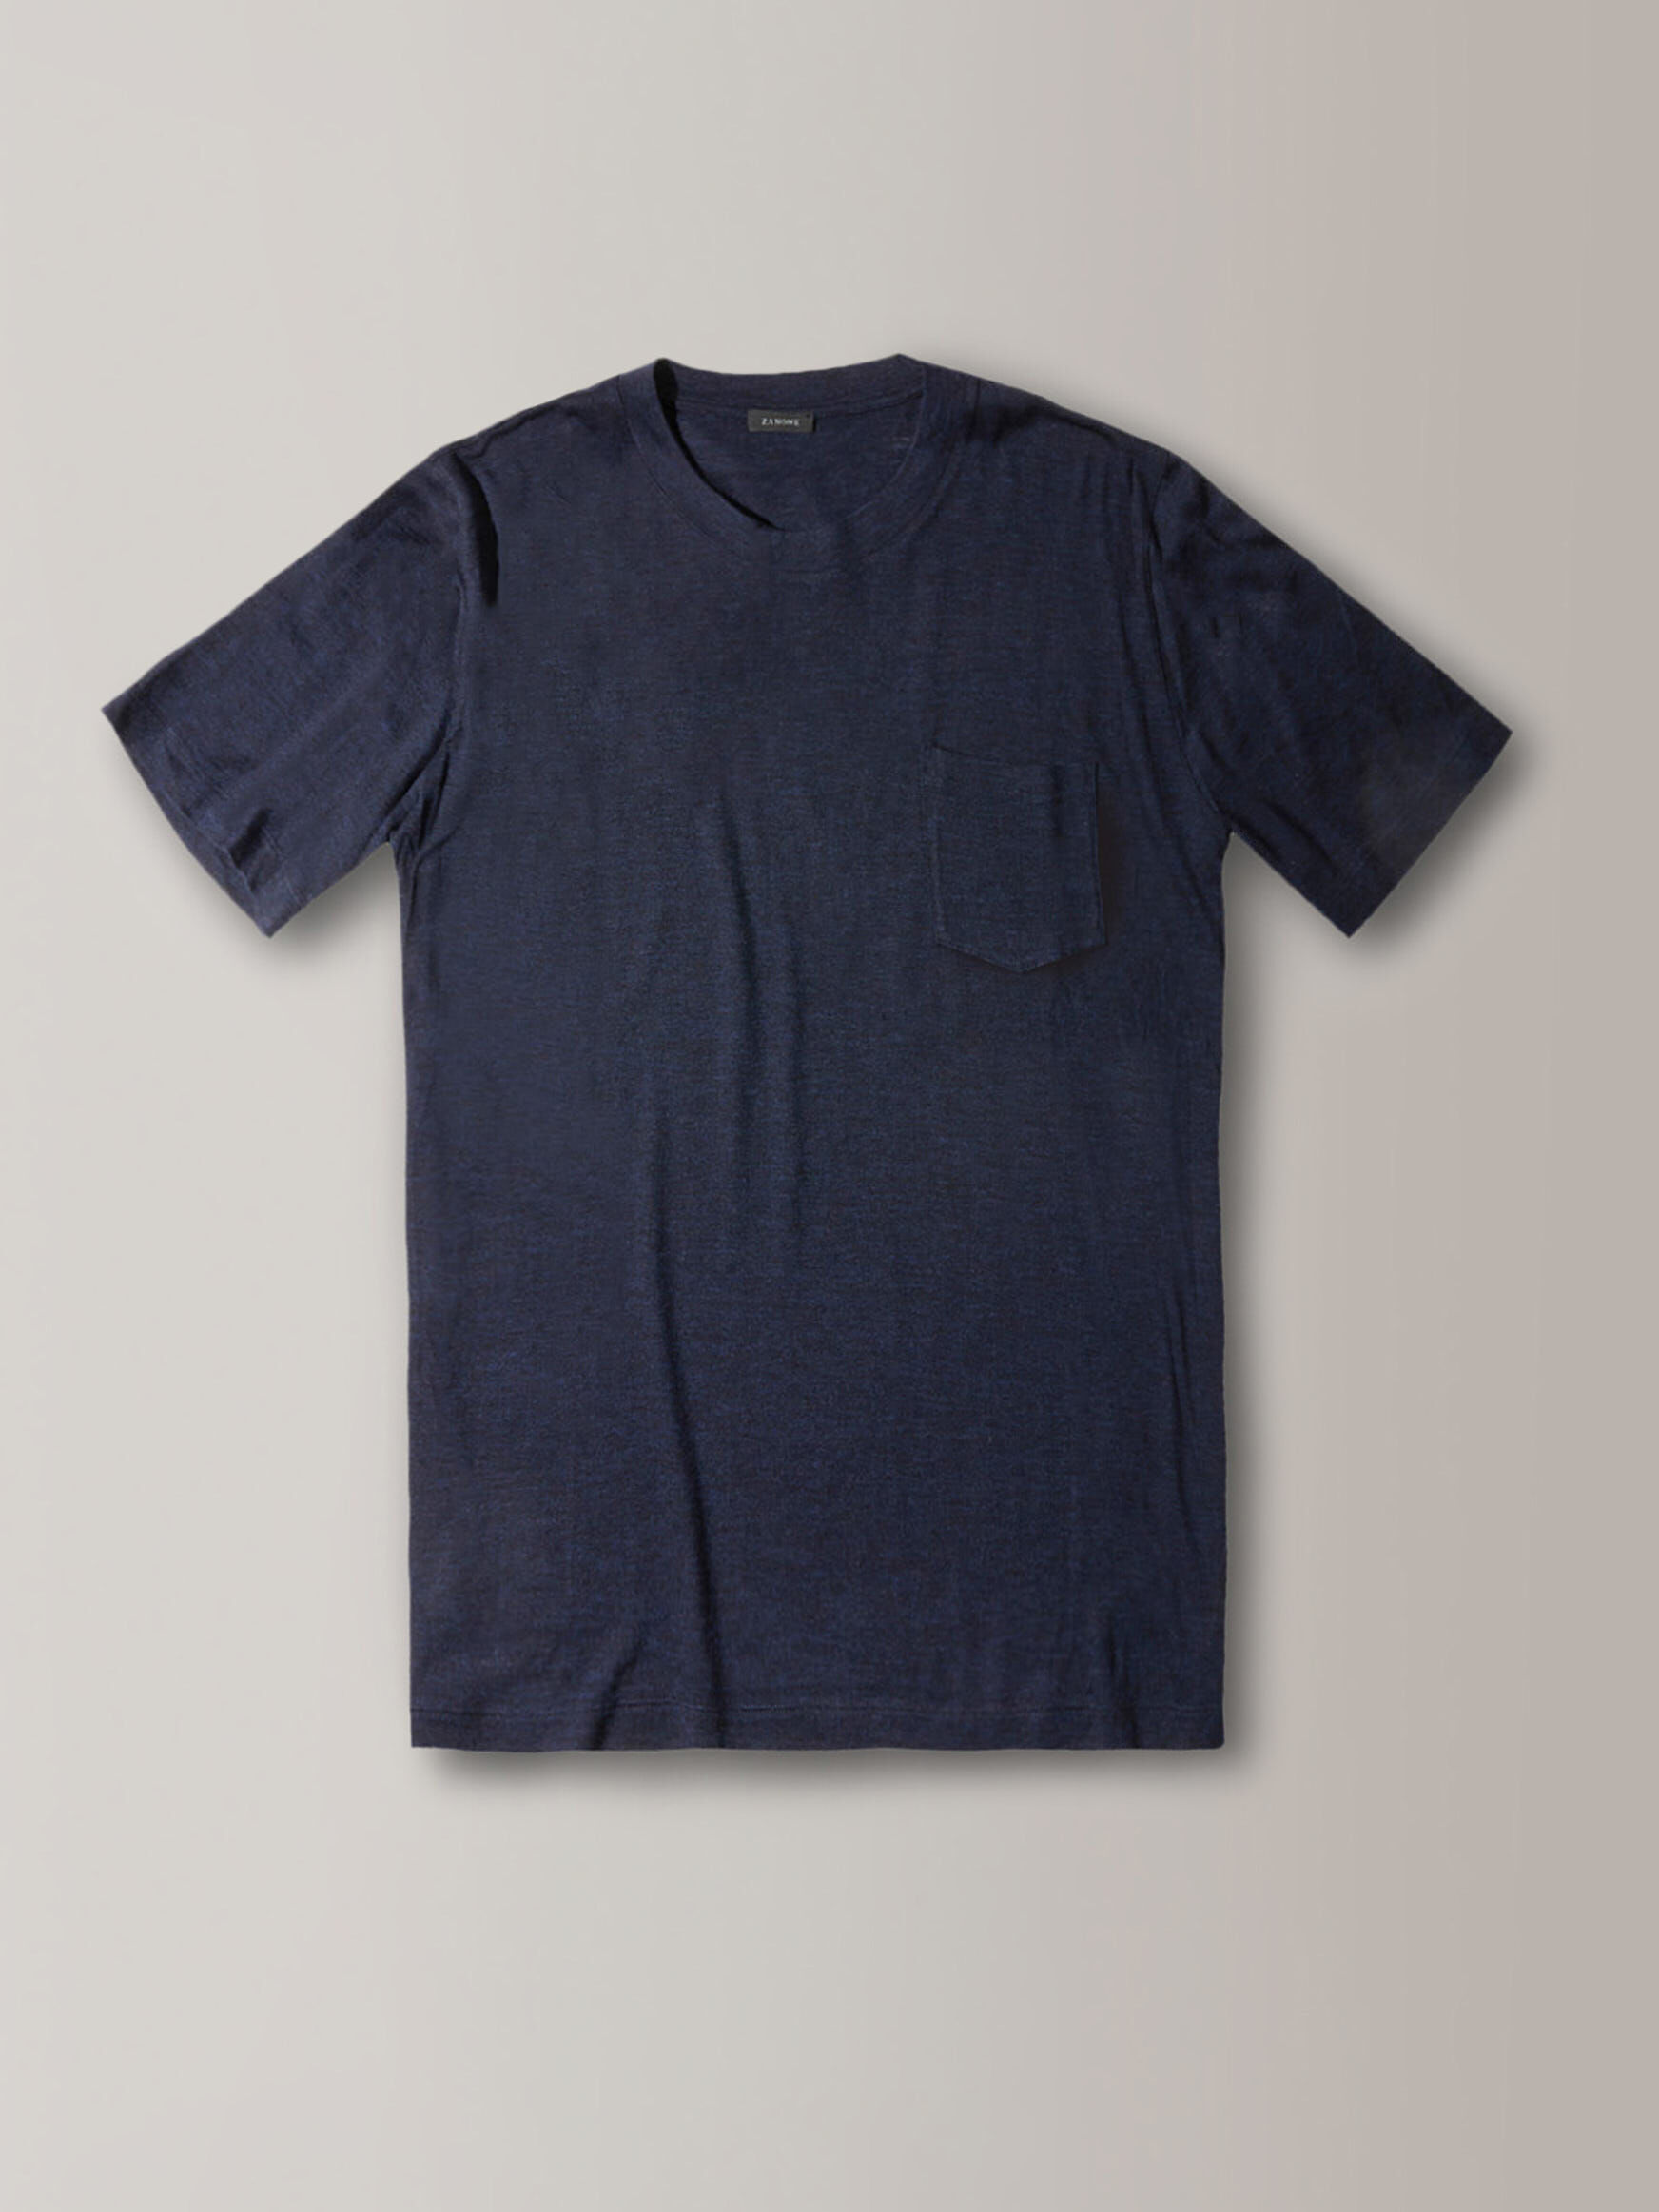 Short-sleeved merino wool jersey T-shirt